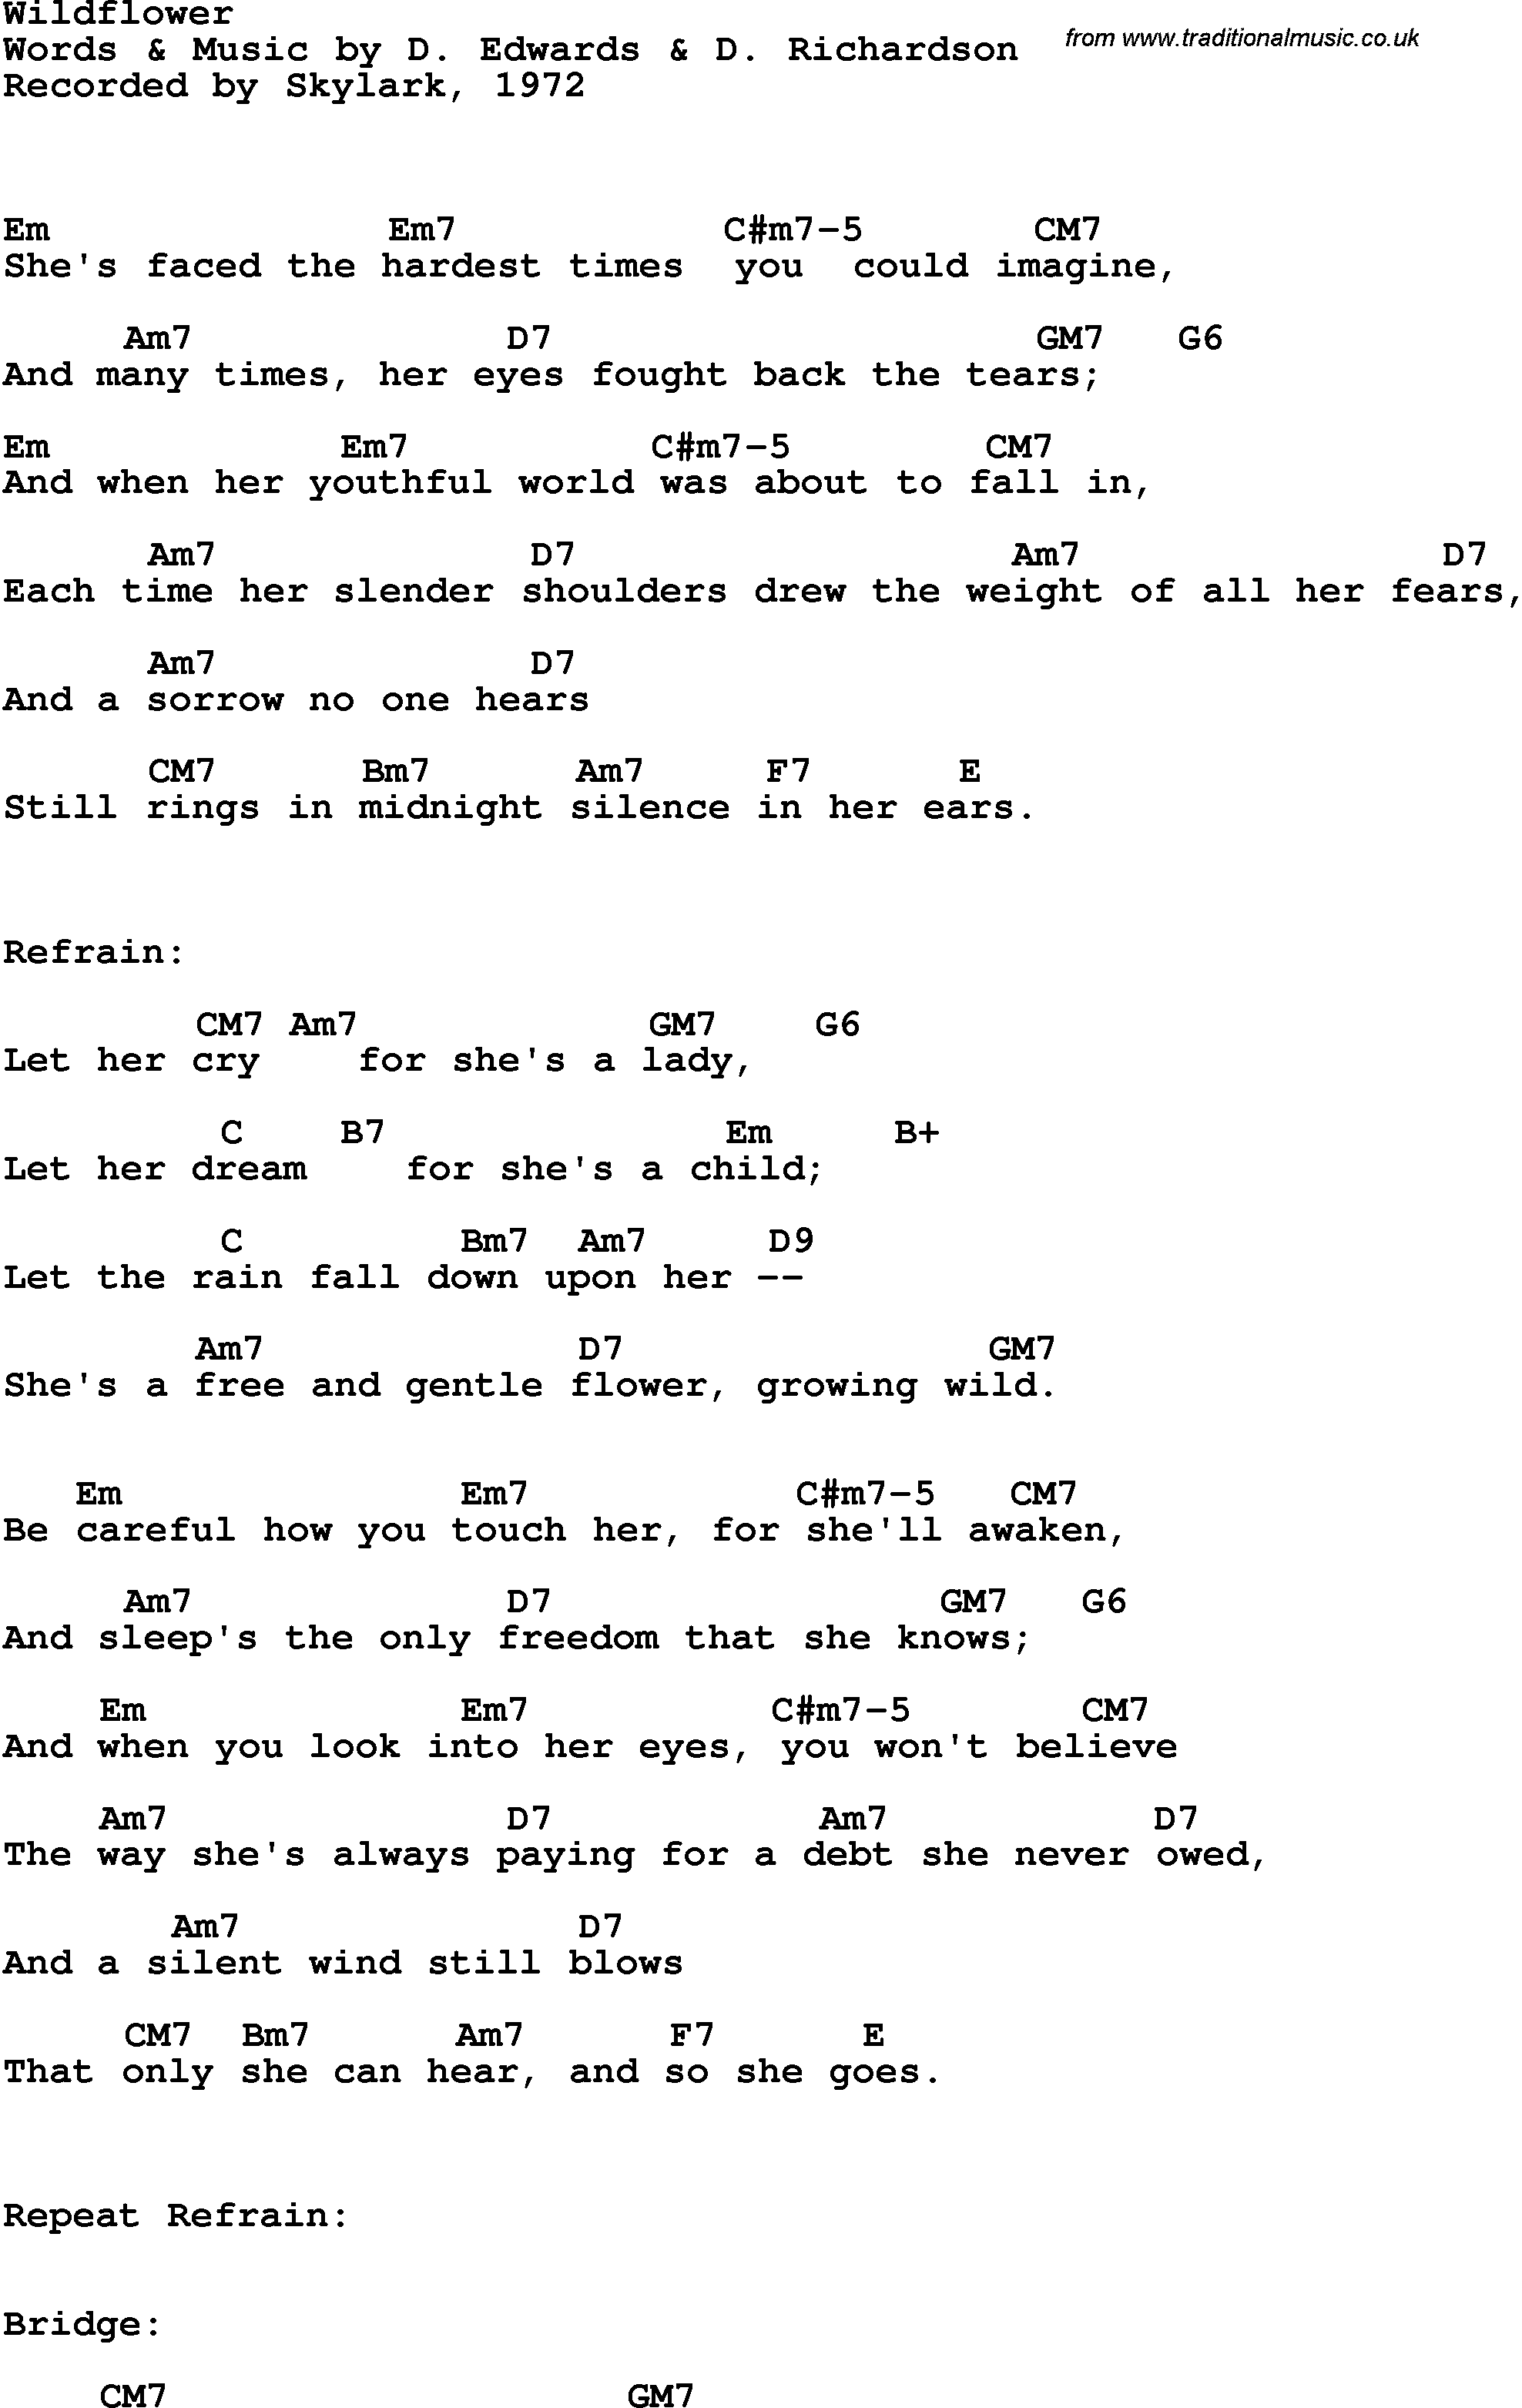 Song lyrics with guitar chords for Wildflower Skylark, 1972